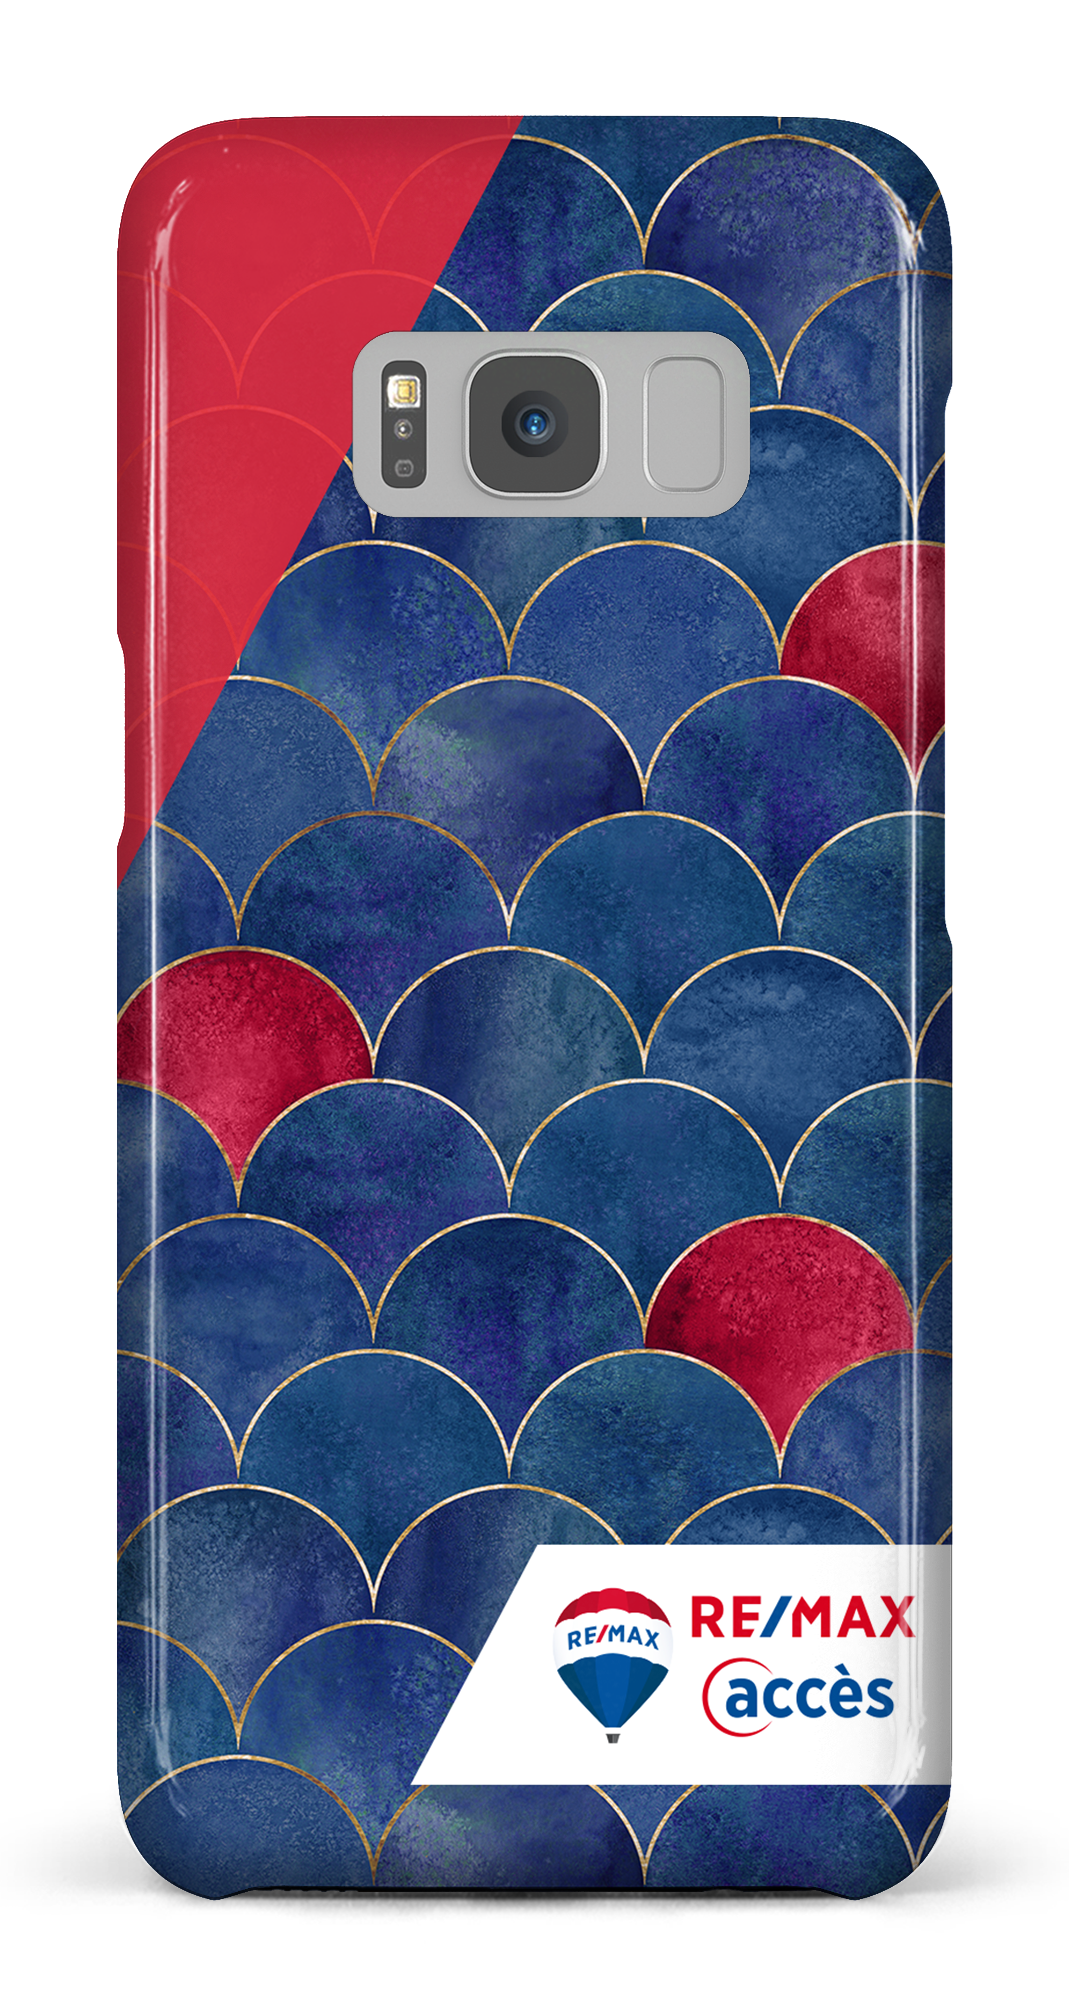 Écailles bicolores - Galaxy S8